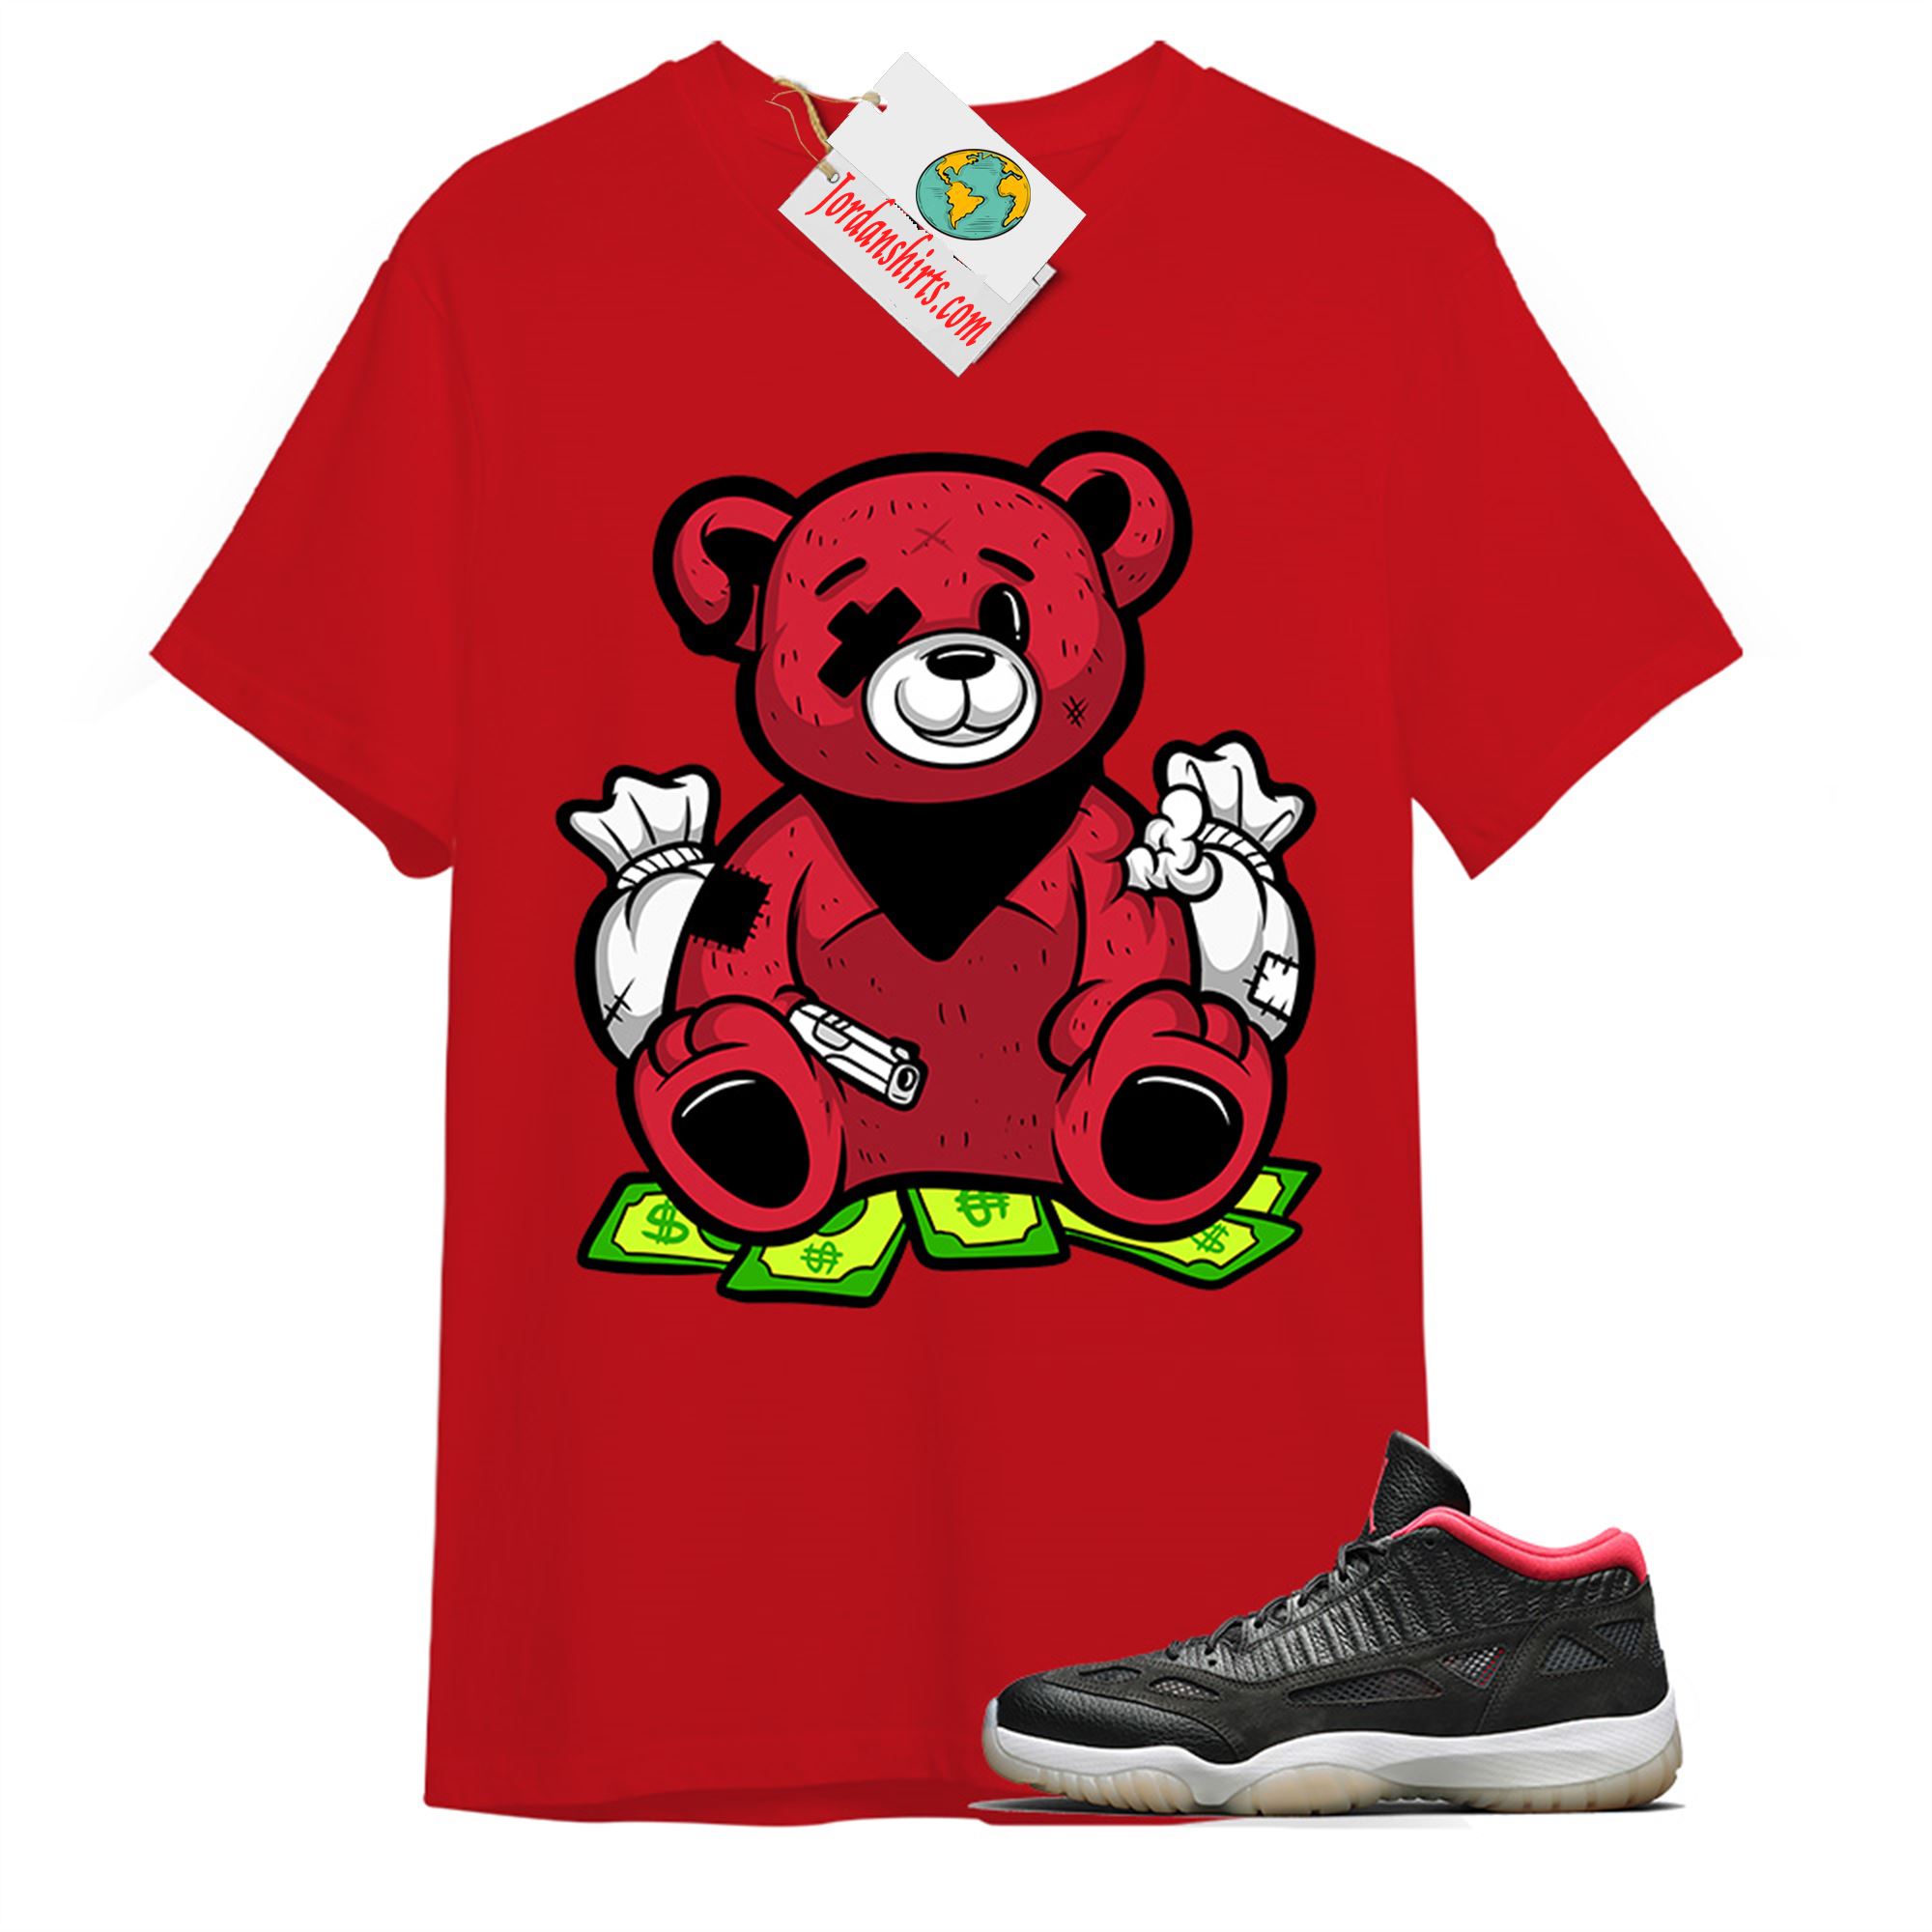 Jordan 11 Shirt, Rich Teddy Bear Gangster Red T-shirt Air Jordan 11 Bred 11s Plus Size Up To 5xl